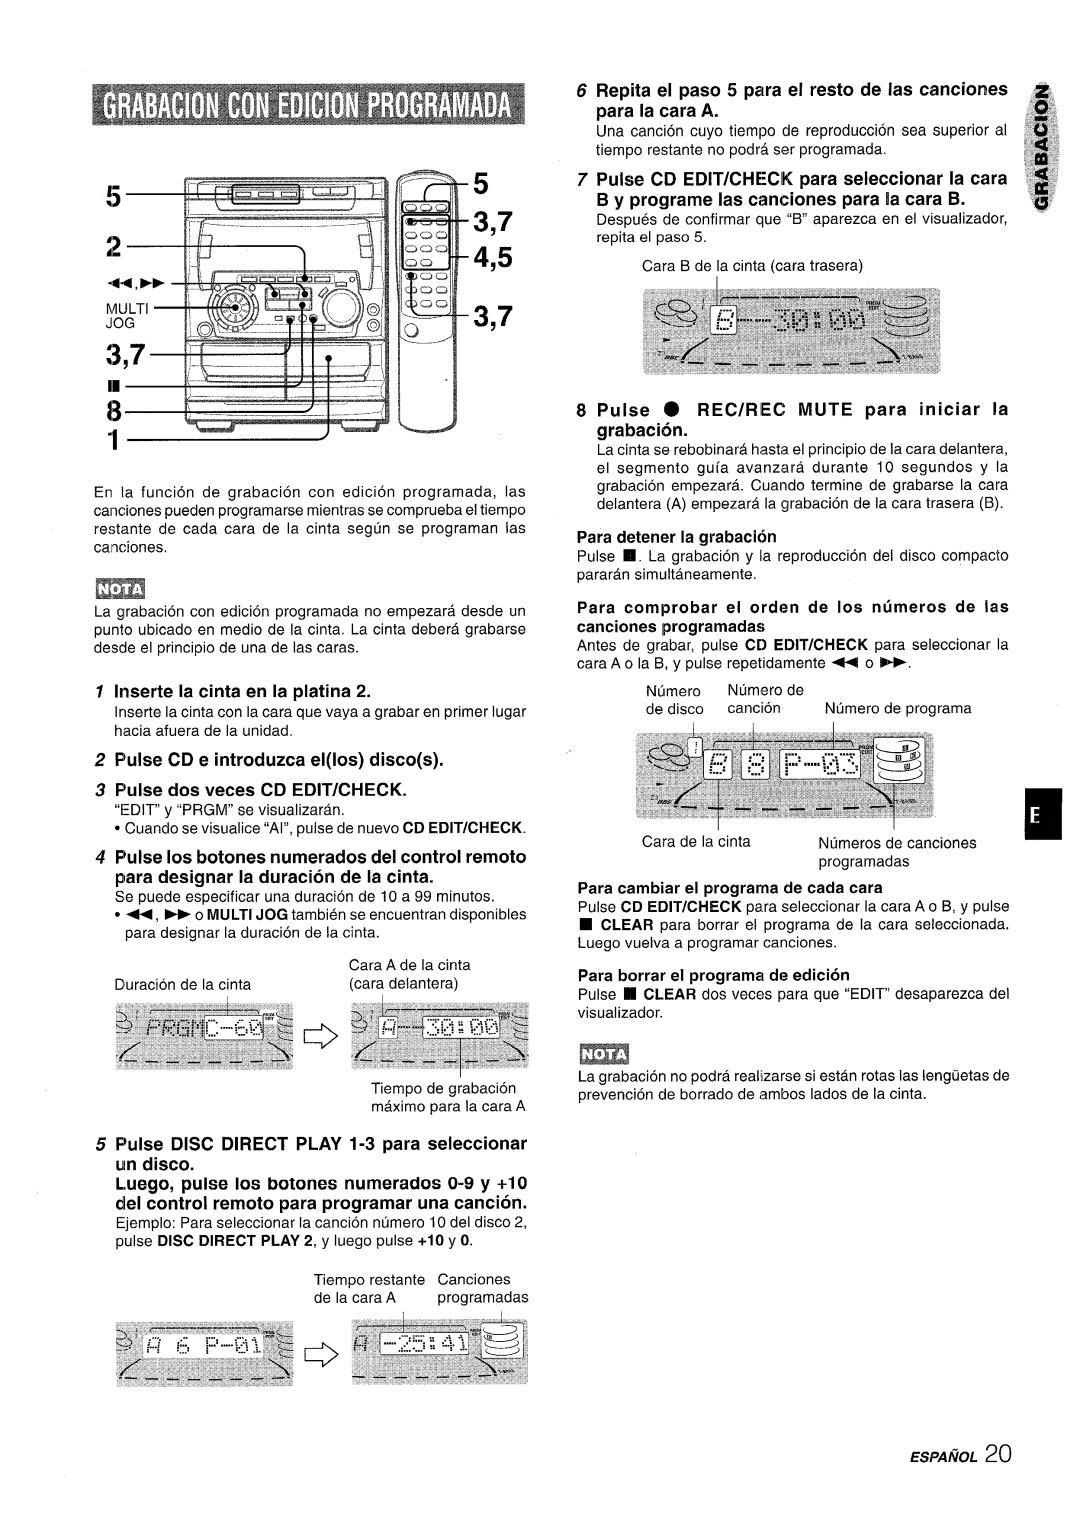 Sony NSX-A707 manual 2 1%.riseCD e introduzca ellos discos 3 Pulse dos veces CD EDIT/CHECK, Para detener la grabaci6n 